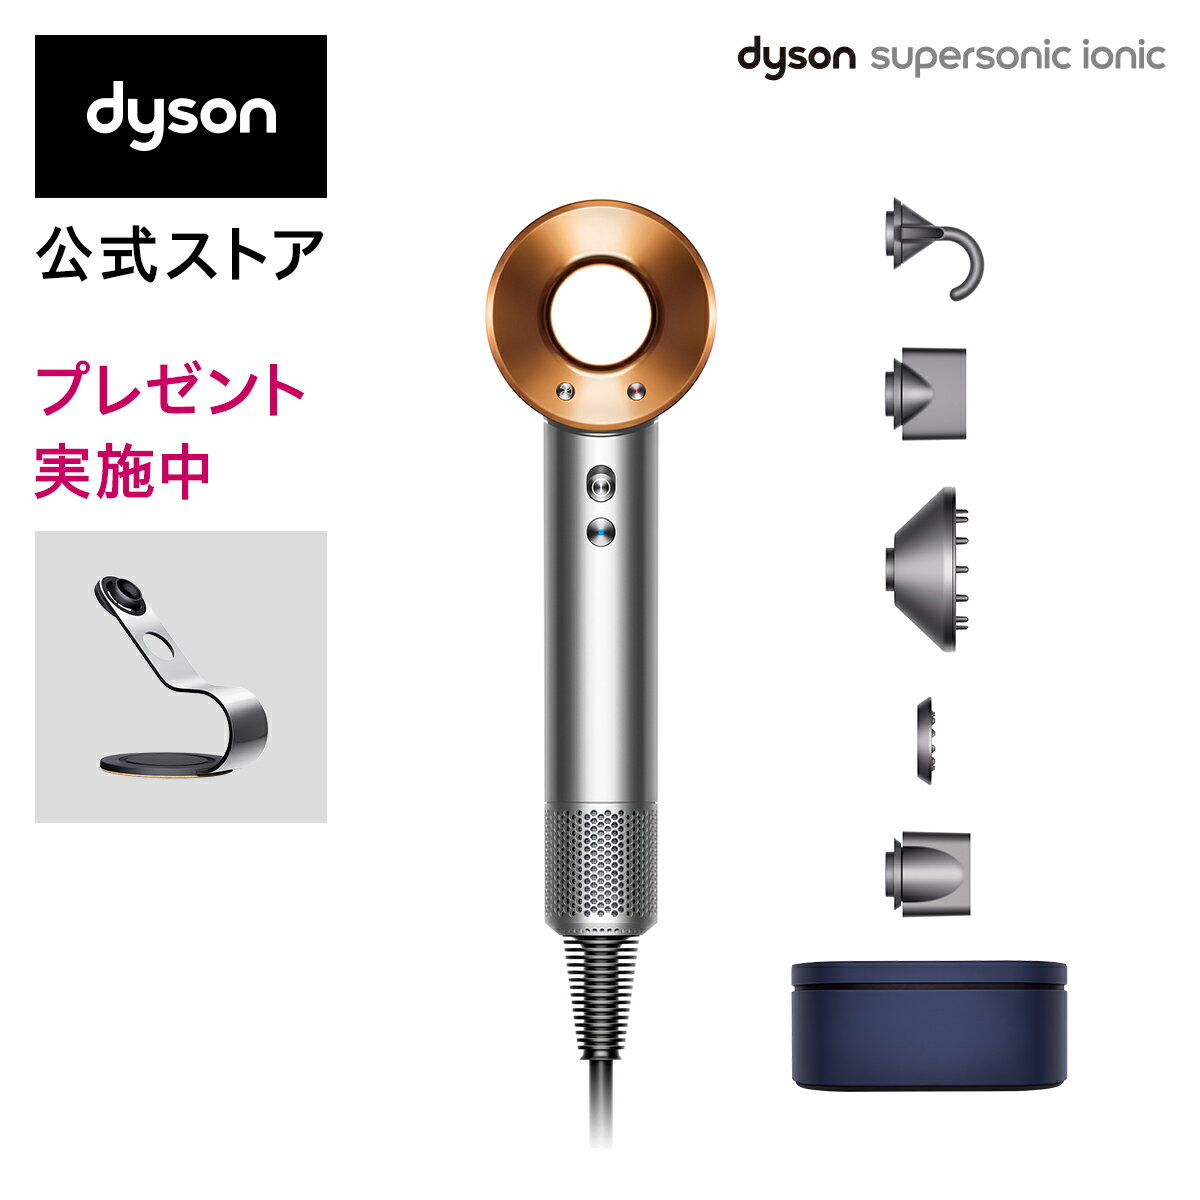 dyson supersonic ionic HD 08 ULF BNBC-